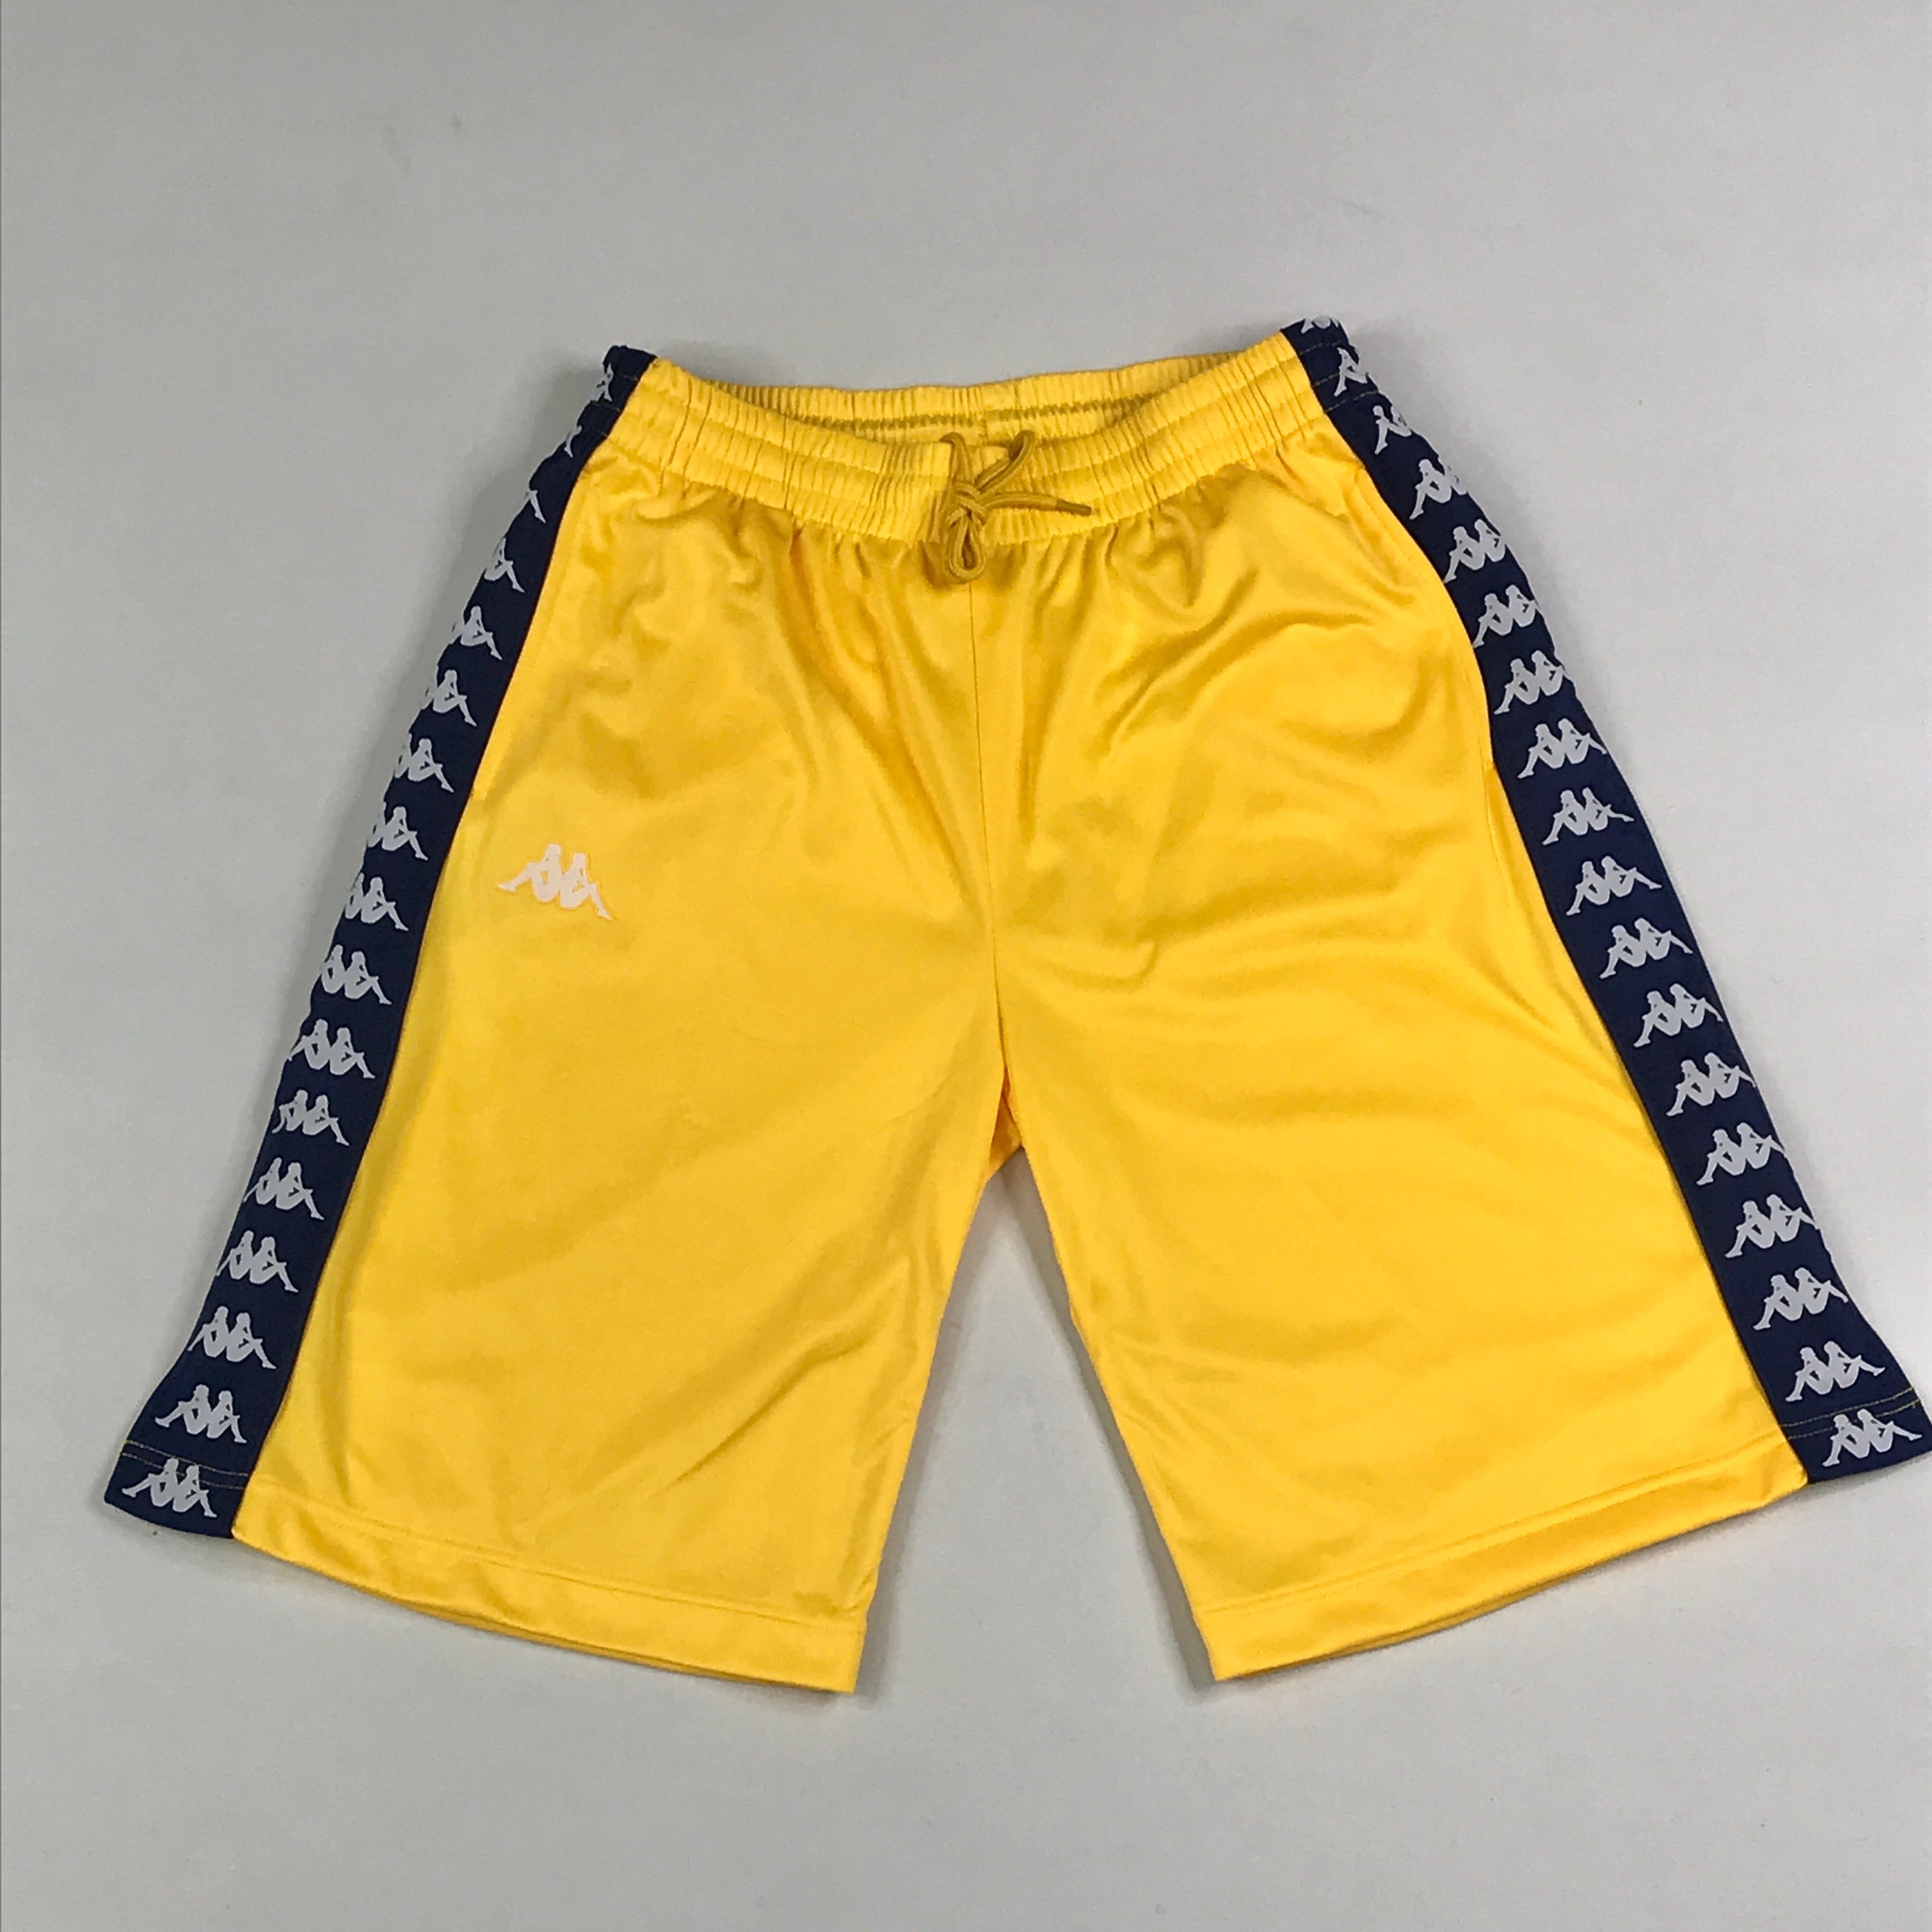 Yellow basketball shorts w/navy kappa strip